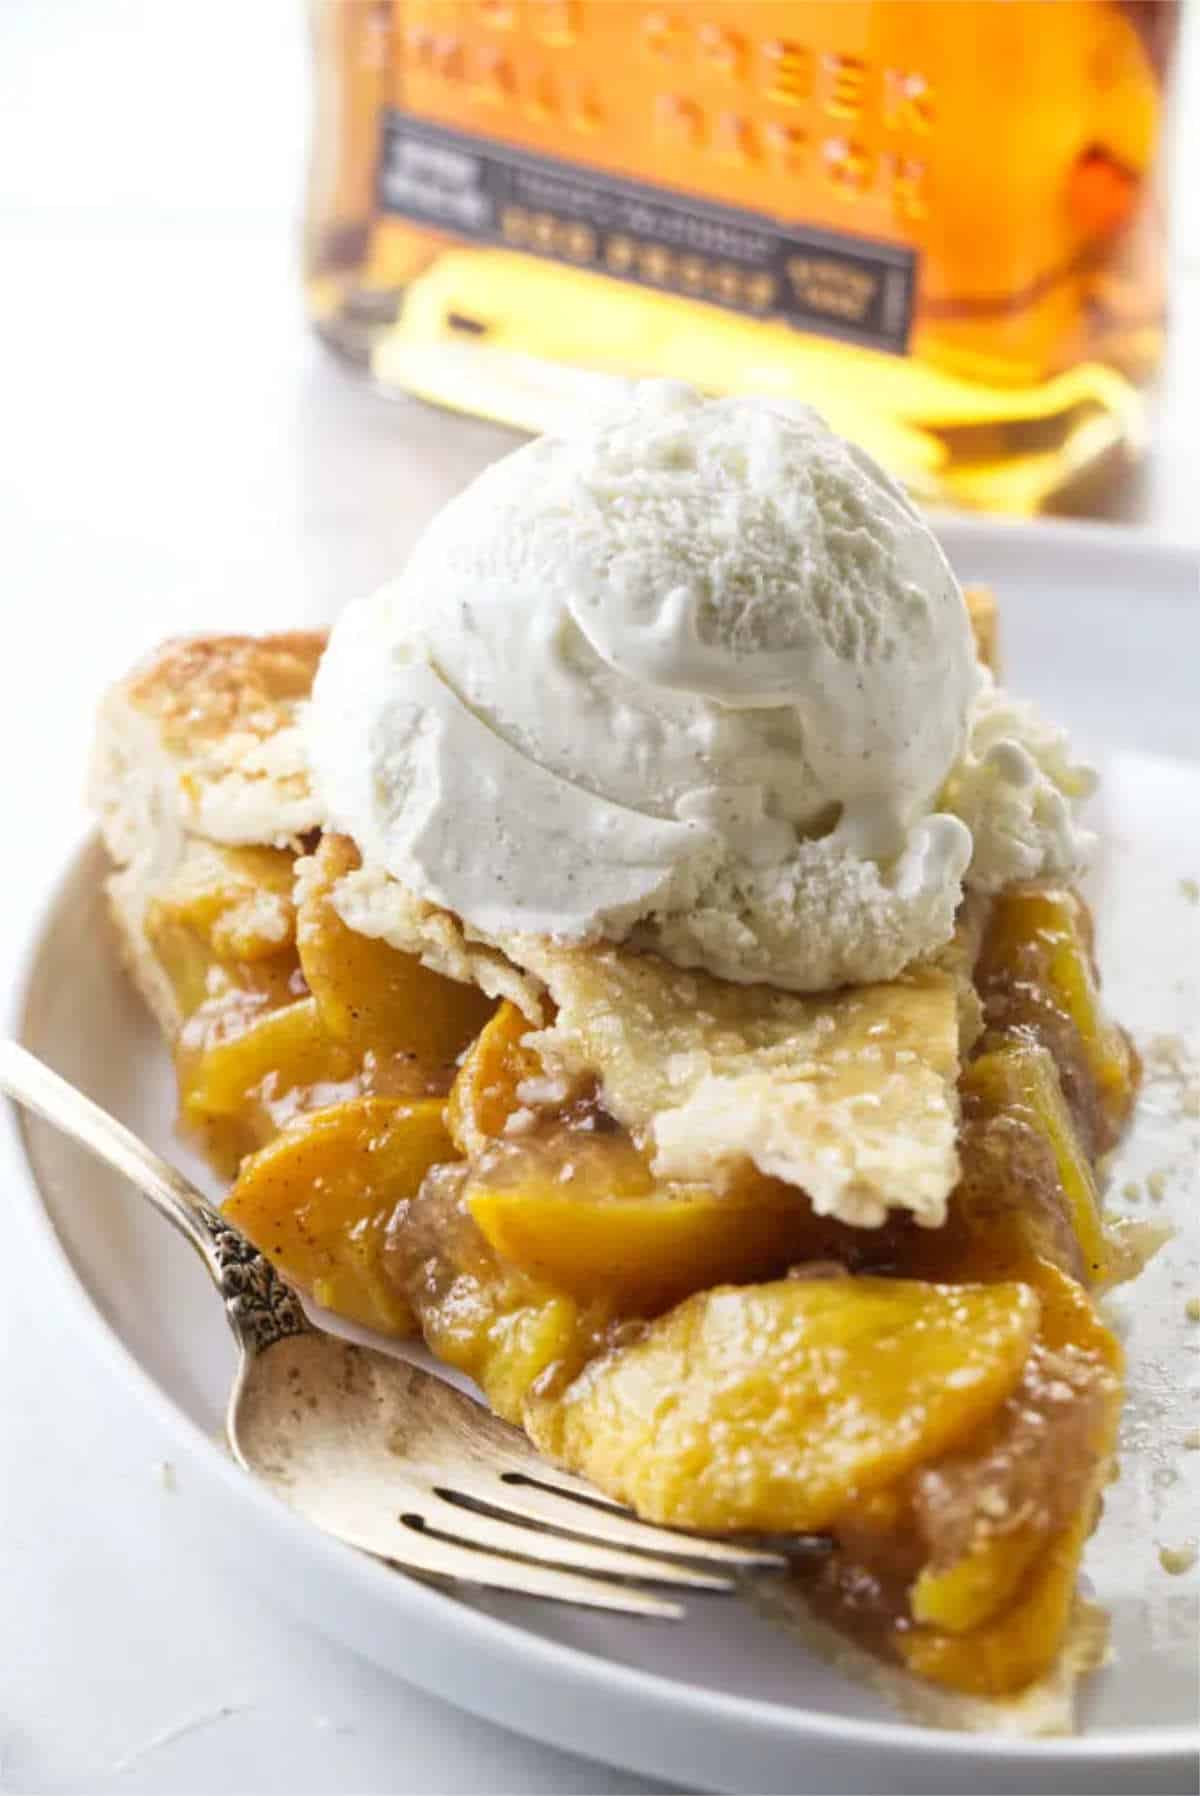 peach pie with ice cream on top.